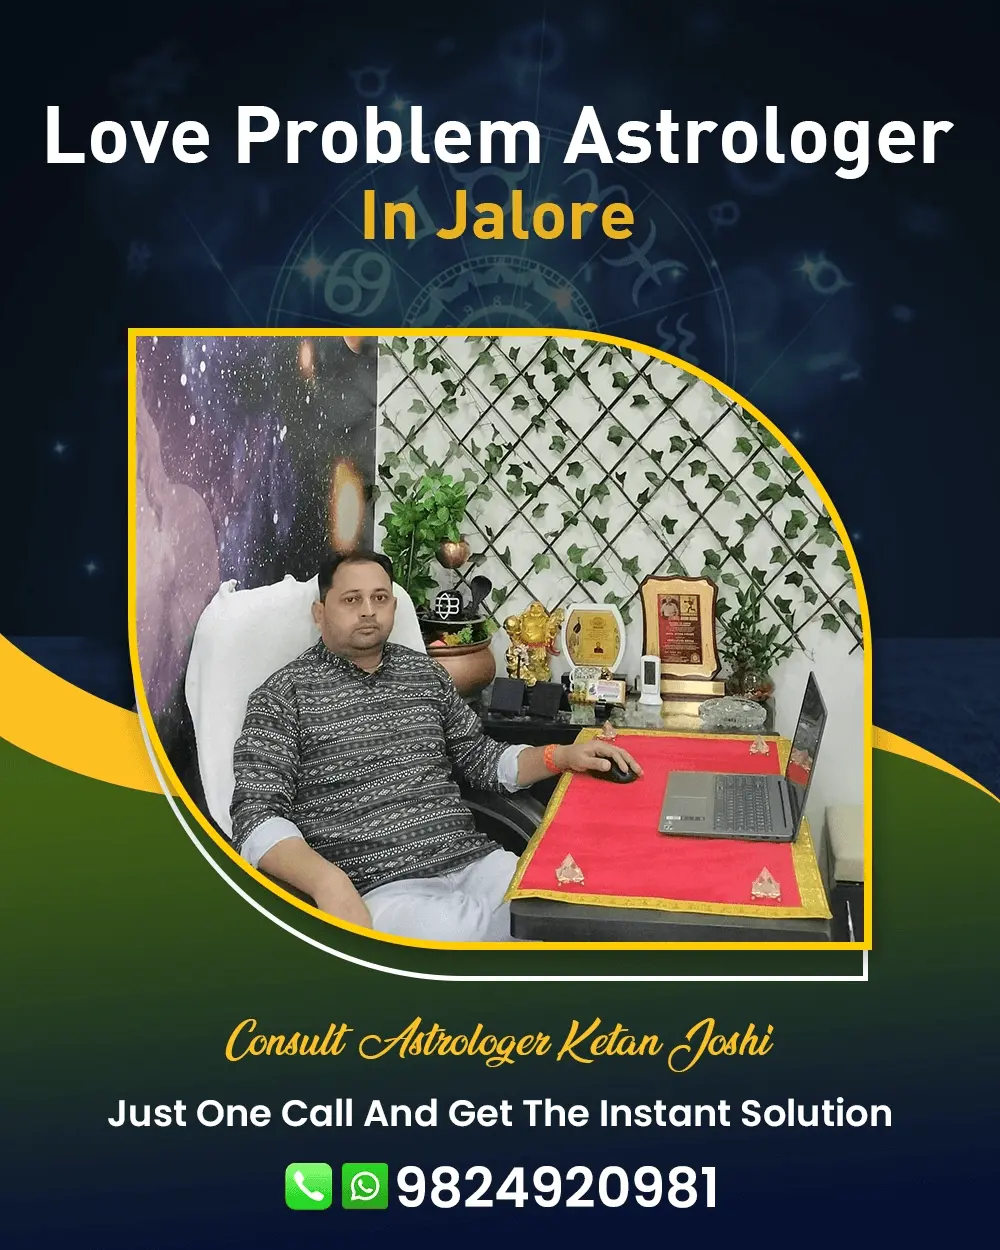 Love Problem Astrologer In Jalore